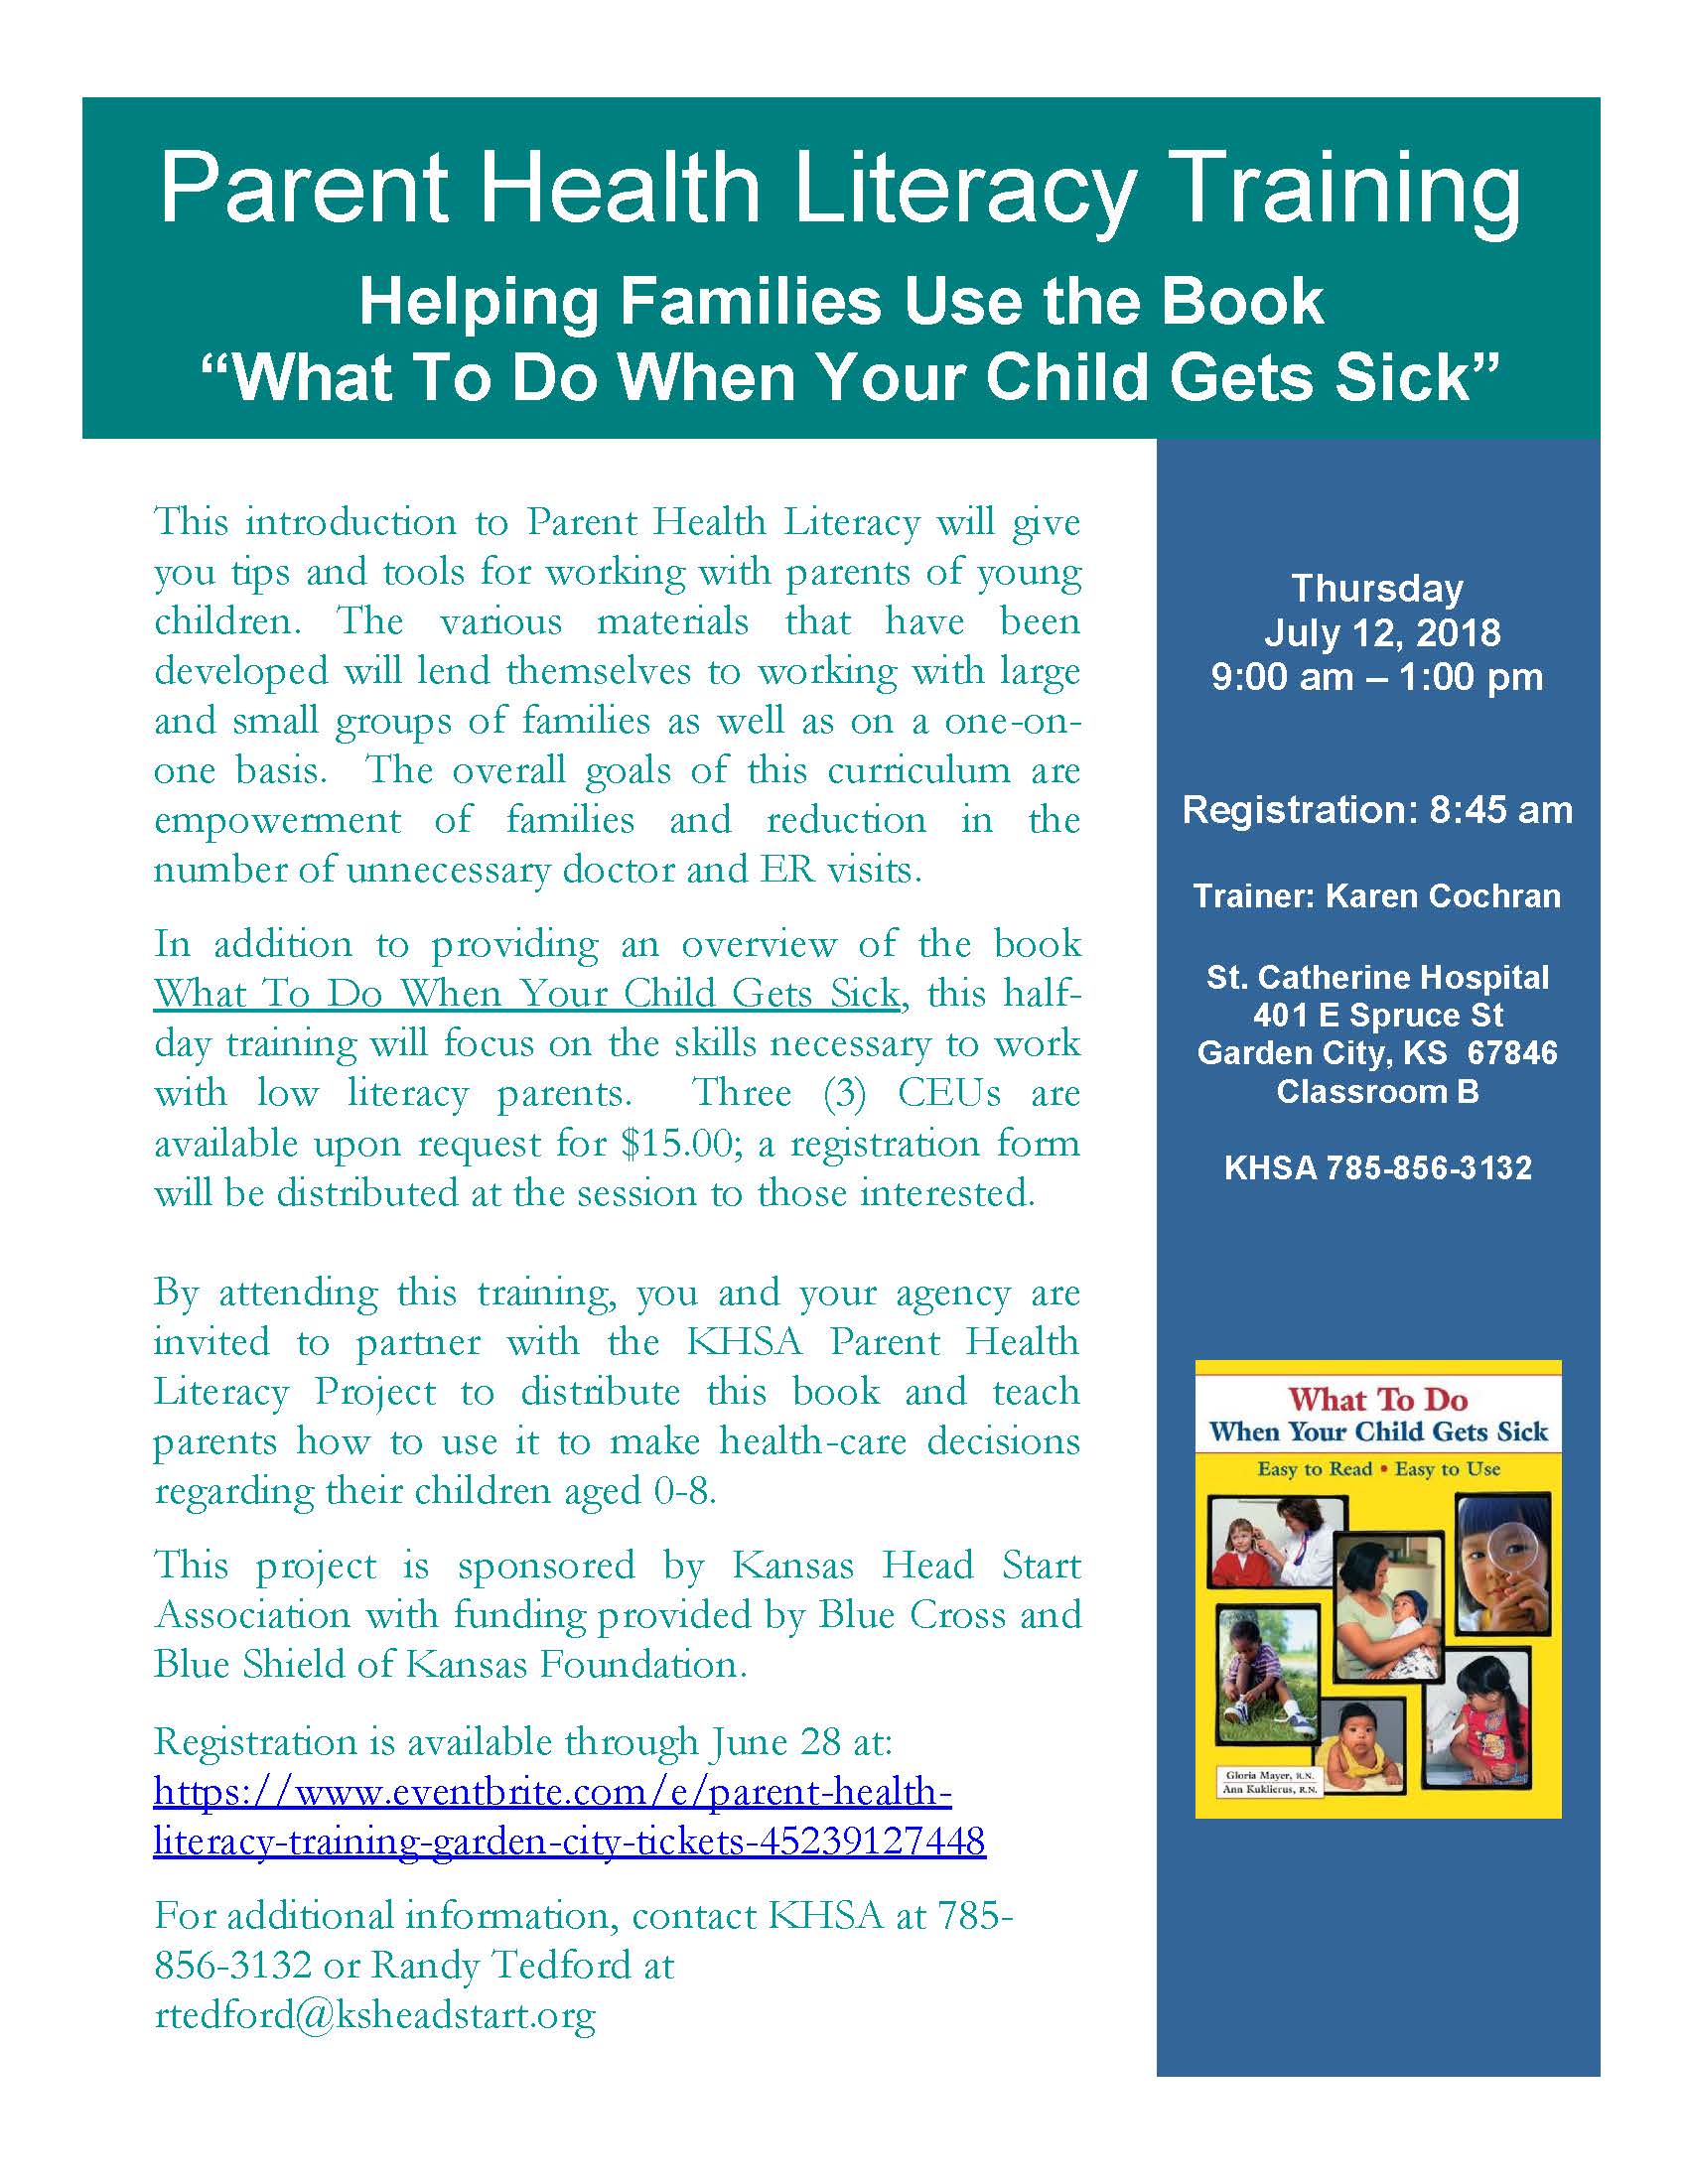 Parent Health Literacy Training Garden City Kansas Head Start